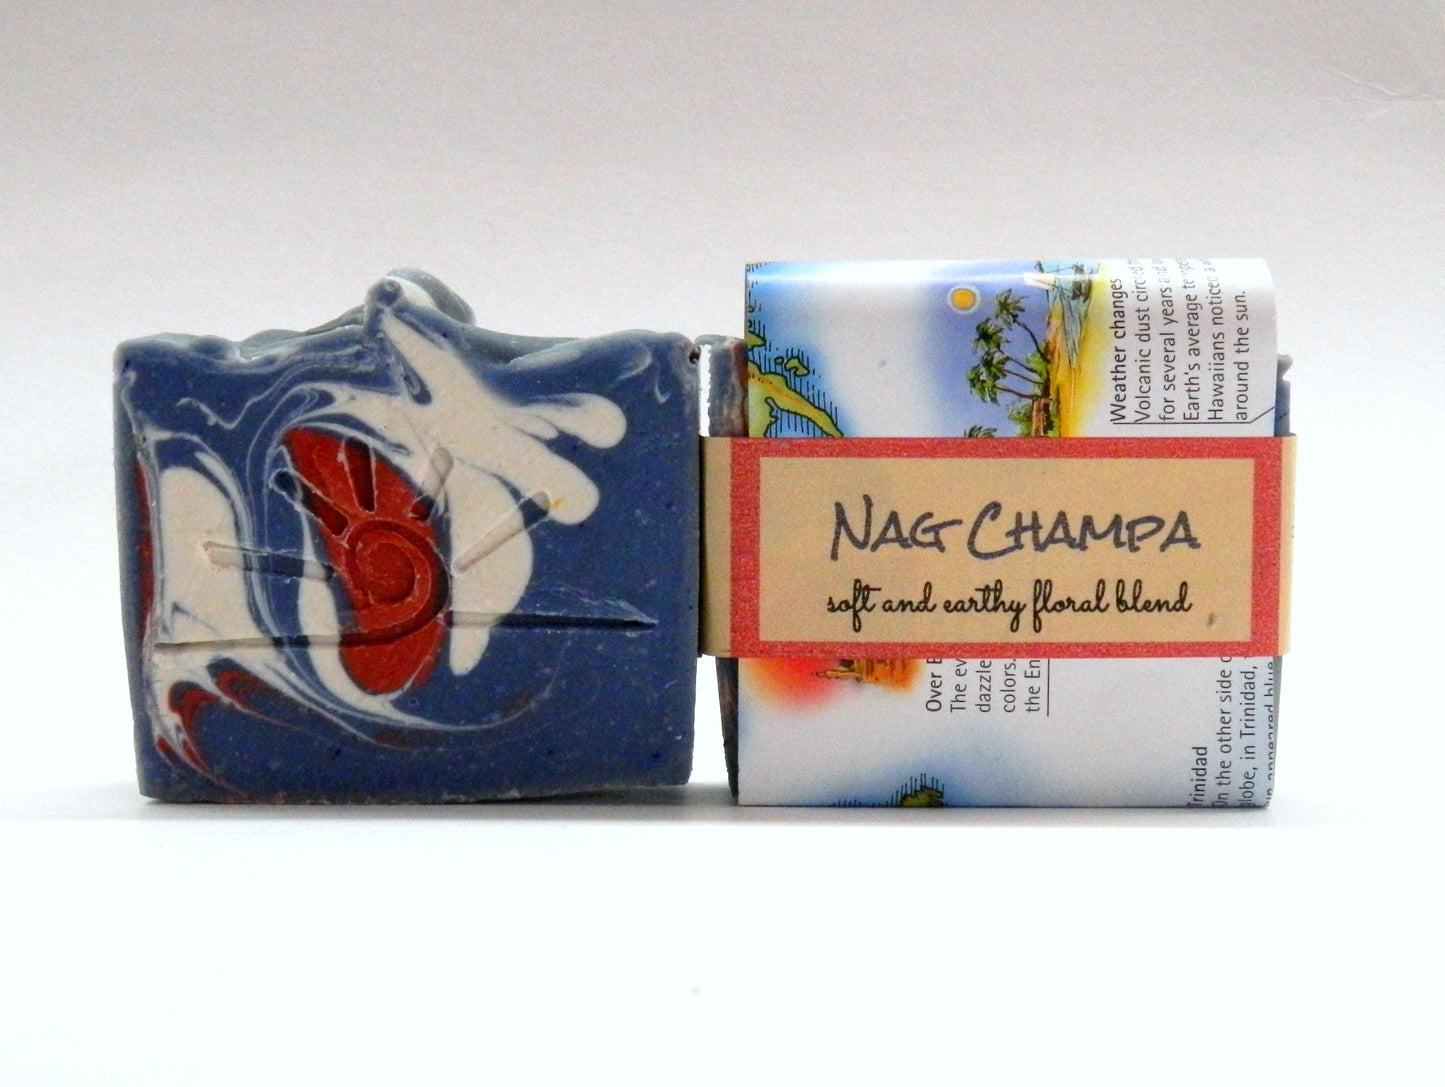 Nag Champa - Handmade Soap – Good Day Sunshine Store